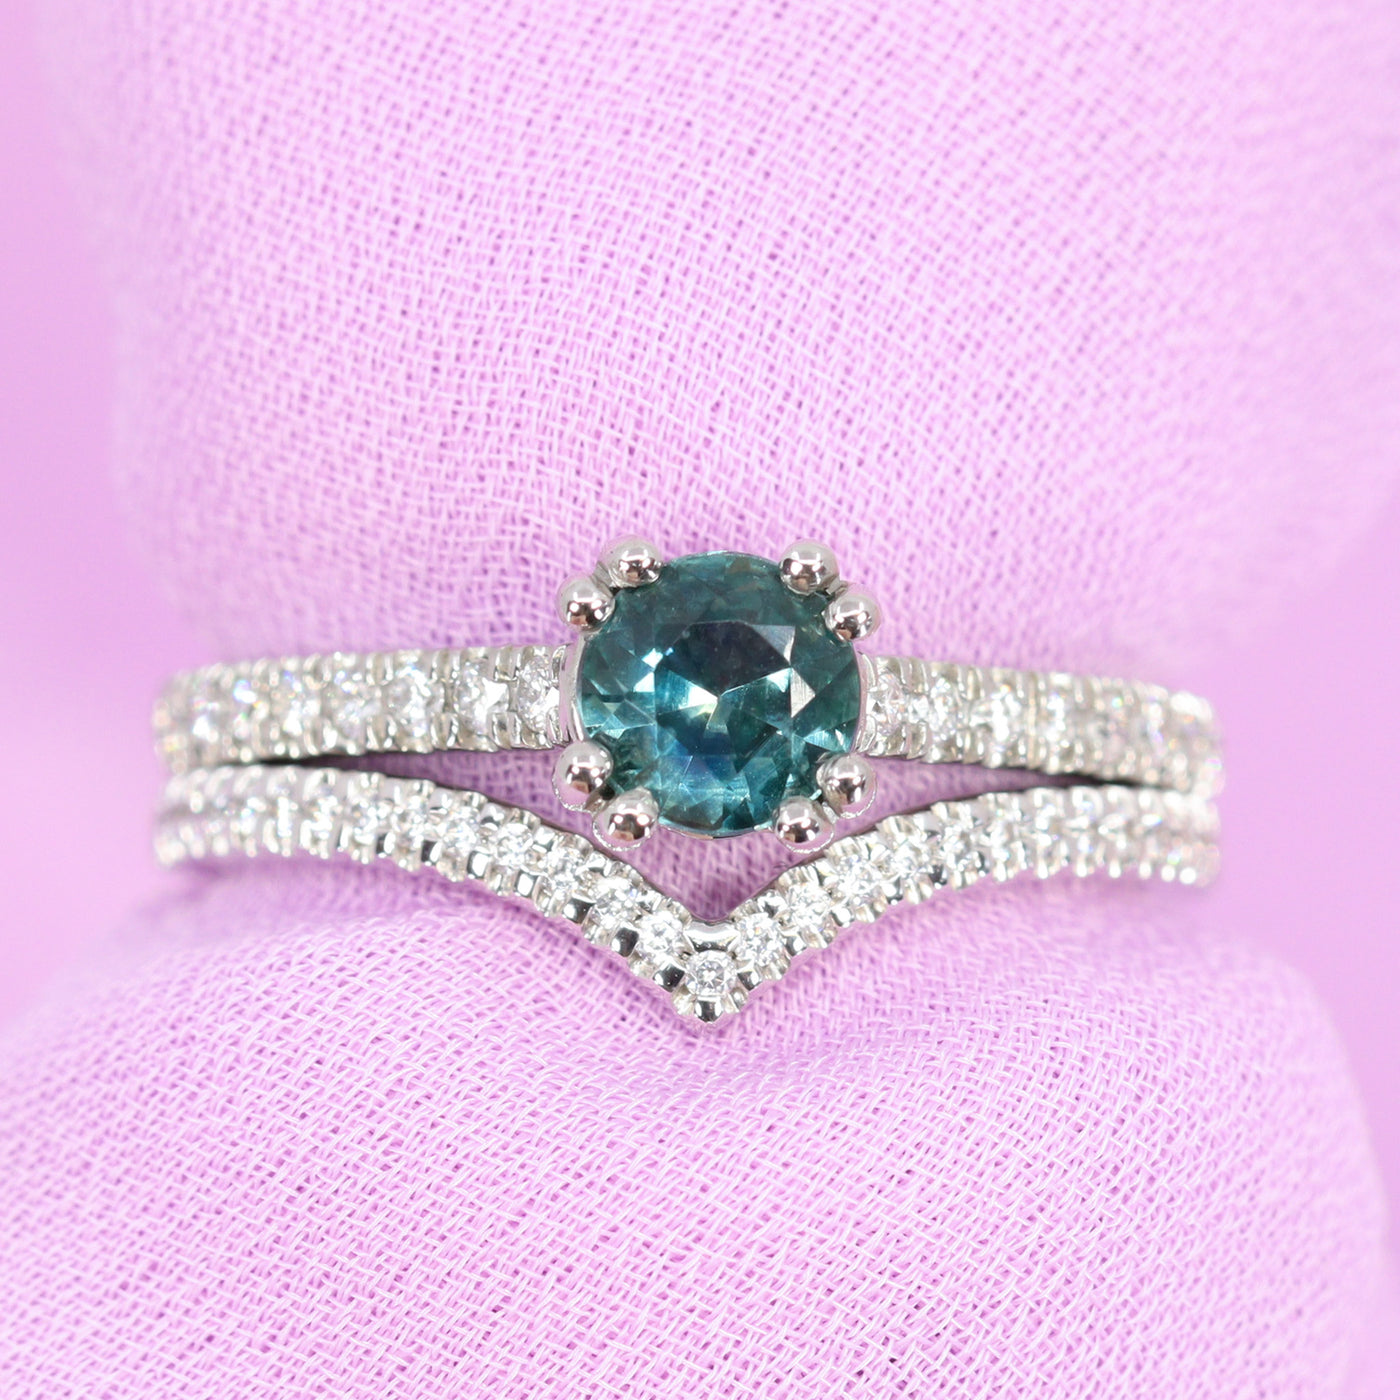 Rebecca & Ellis - Bridal Set - Teal Sapphire Ring with Diamond Set Shoulders and Diamond Set Wishbone Wedding Ring - Made-to-Order